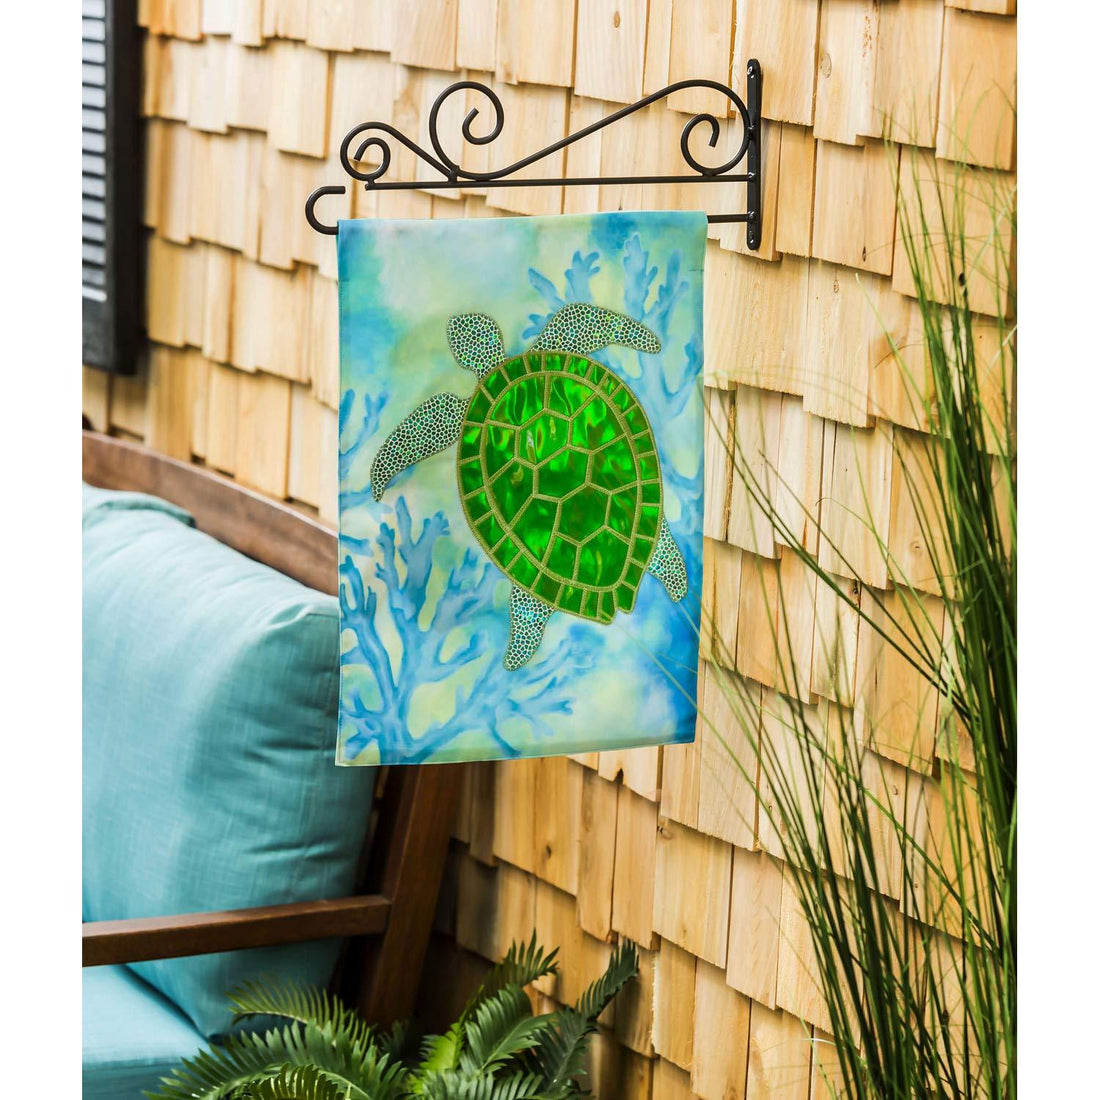 Sea Turtle Summer Linen Garden Flag - Kitty Hawk Kites Online Store